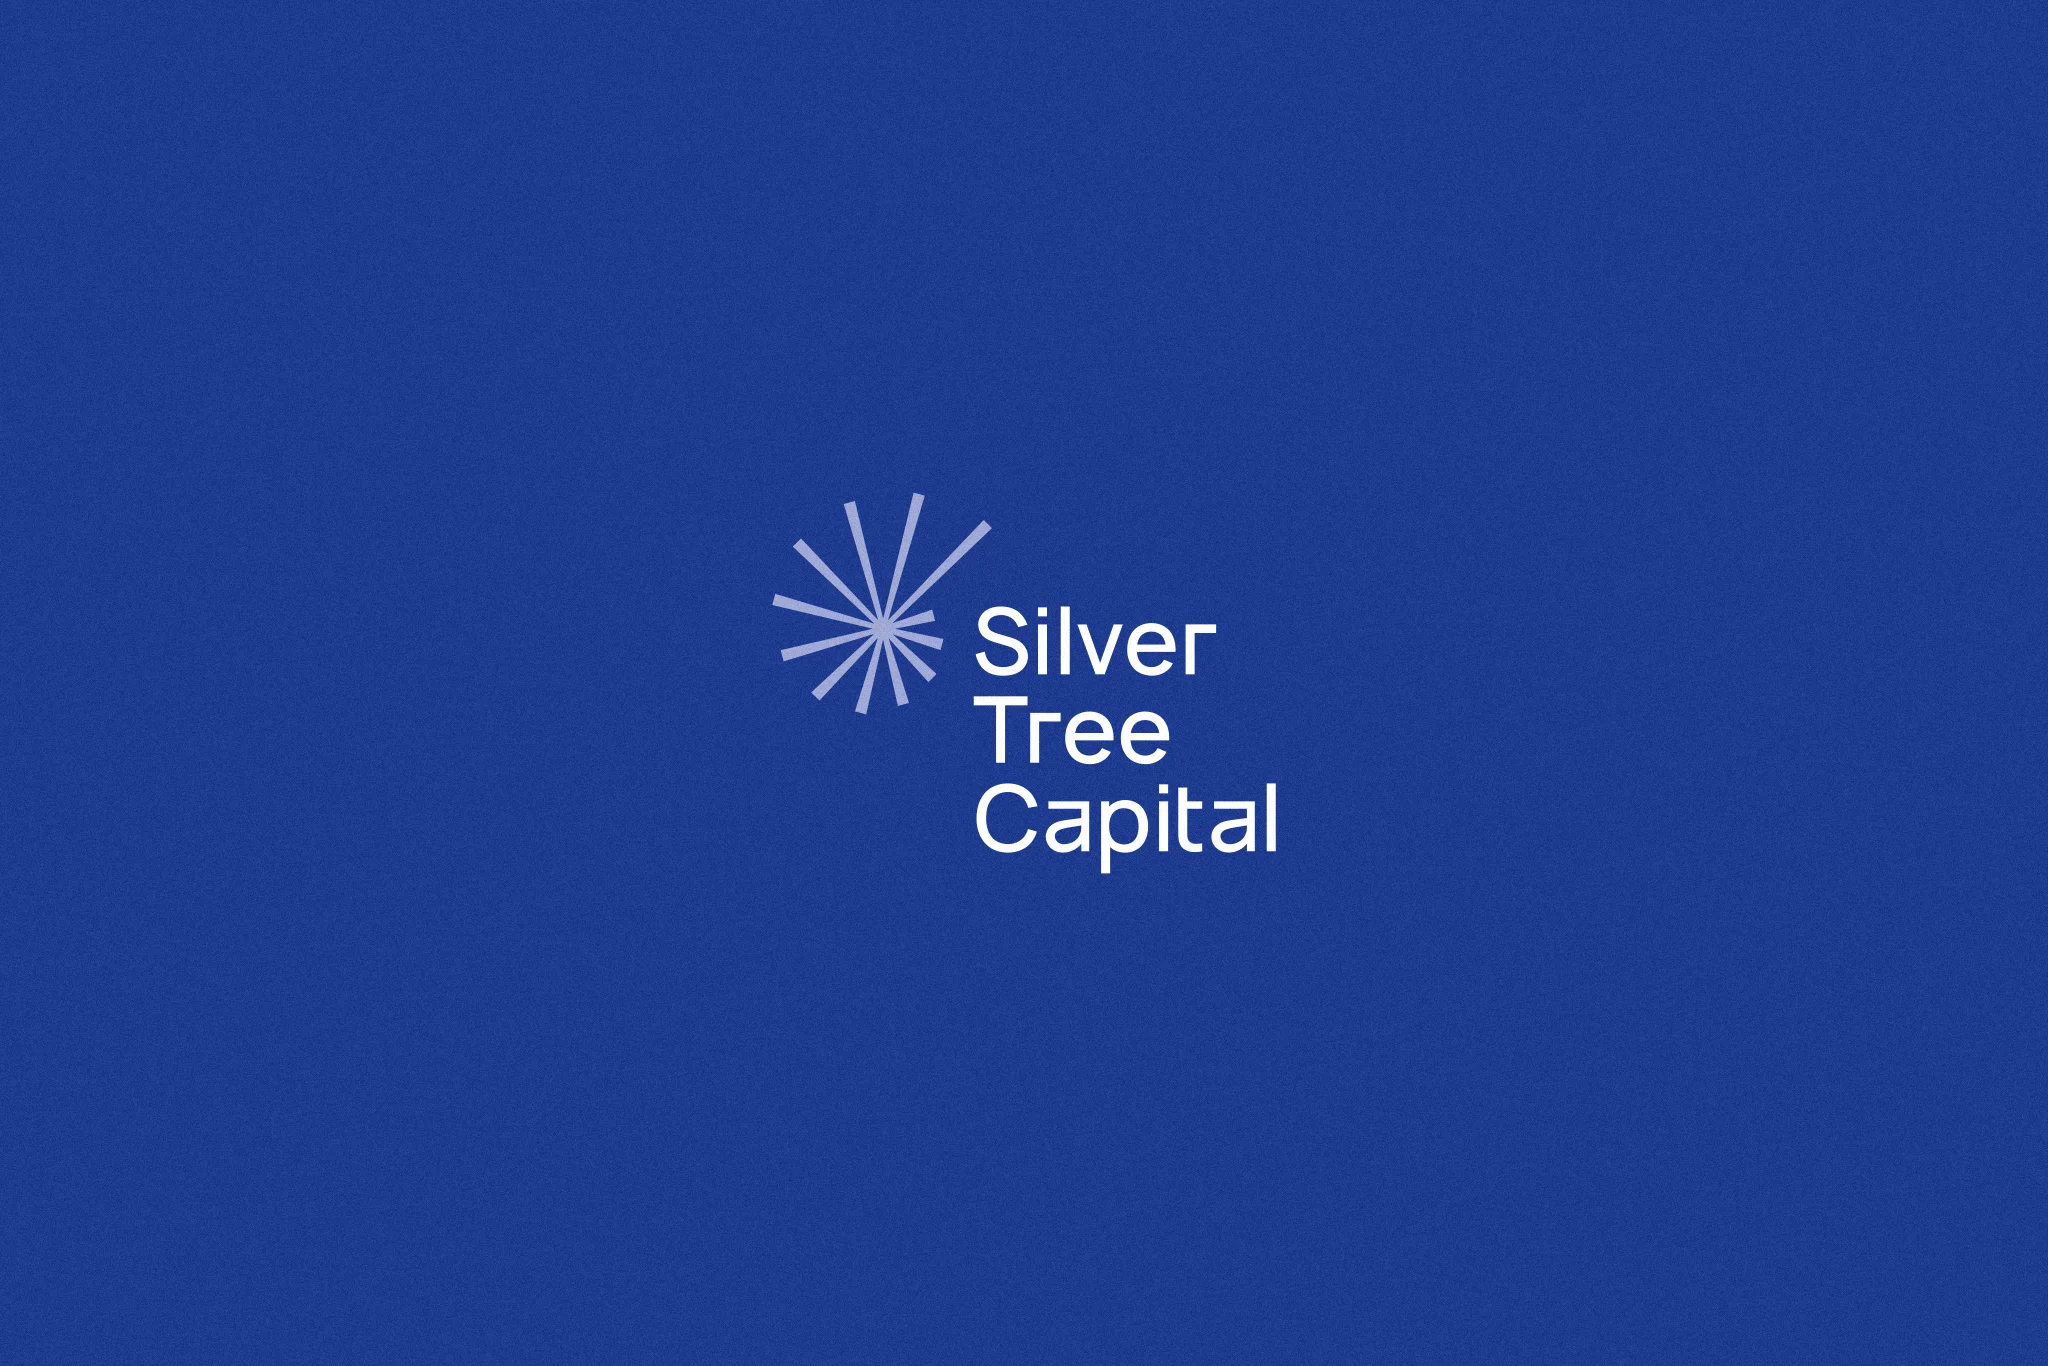 Graphic design project: Silver Tree Capital logo design and brand identity